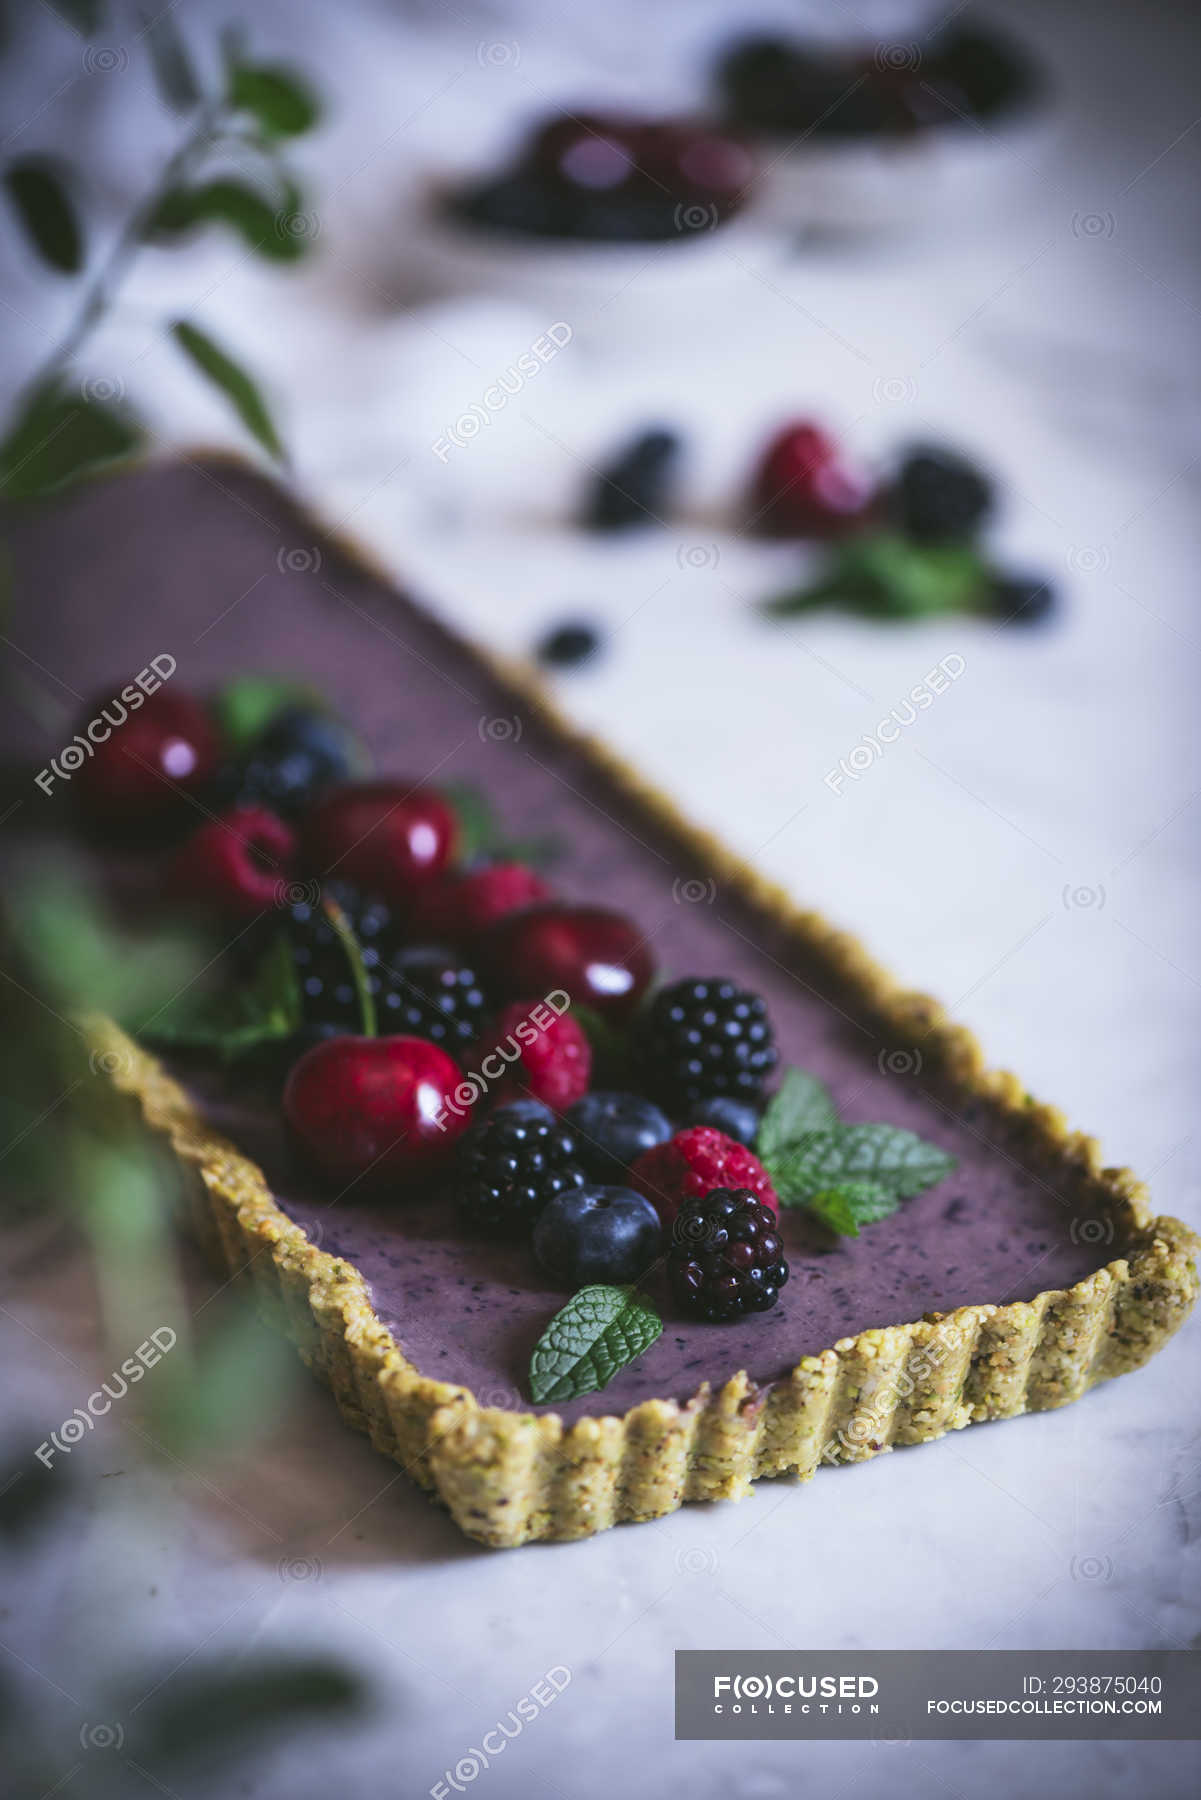 Sabroso pastel rectangular decorado con bayas de verano en la mesa blanca —  tarta, Arándanos - Stock Photo | #293875040